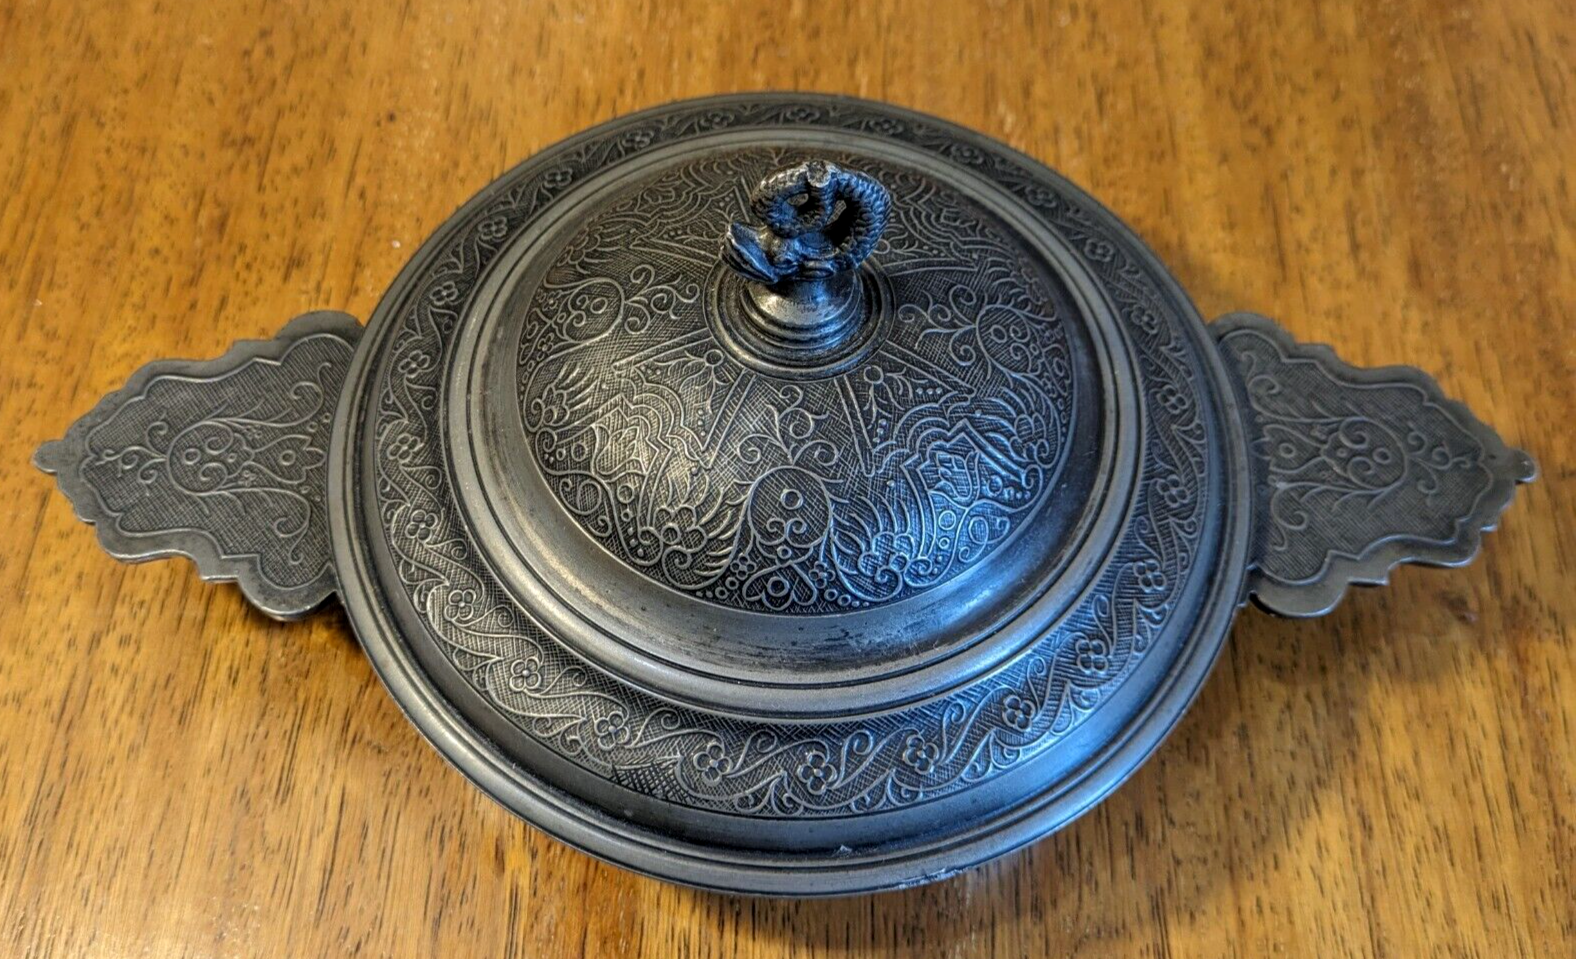 18th 19th Century French Hallmarked Pewter Porringer Bowl 2 Handles Dish Antique